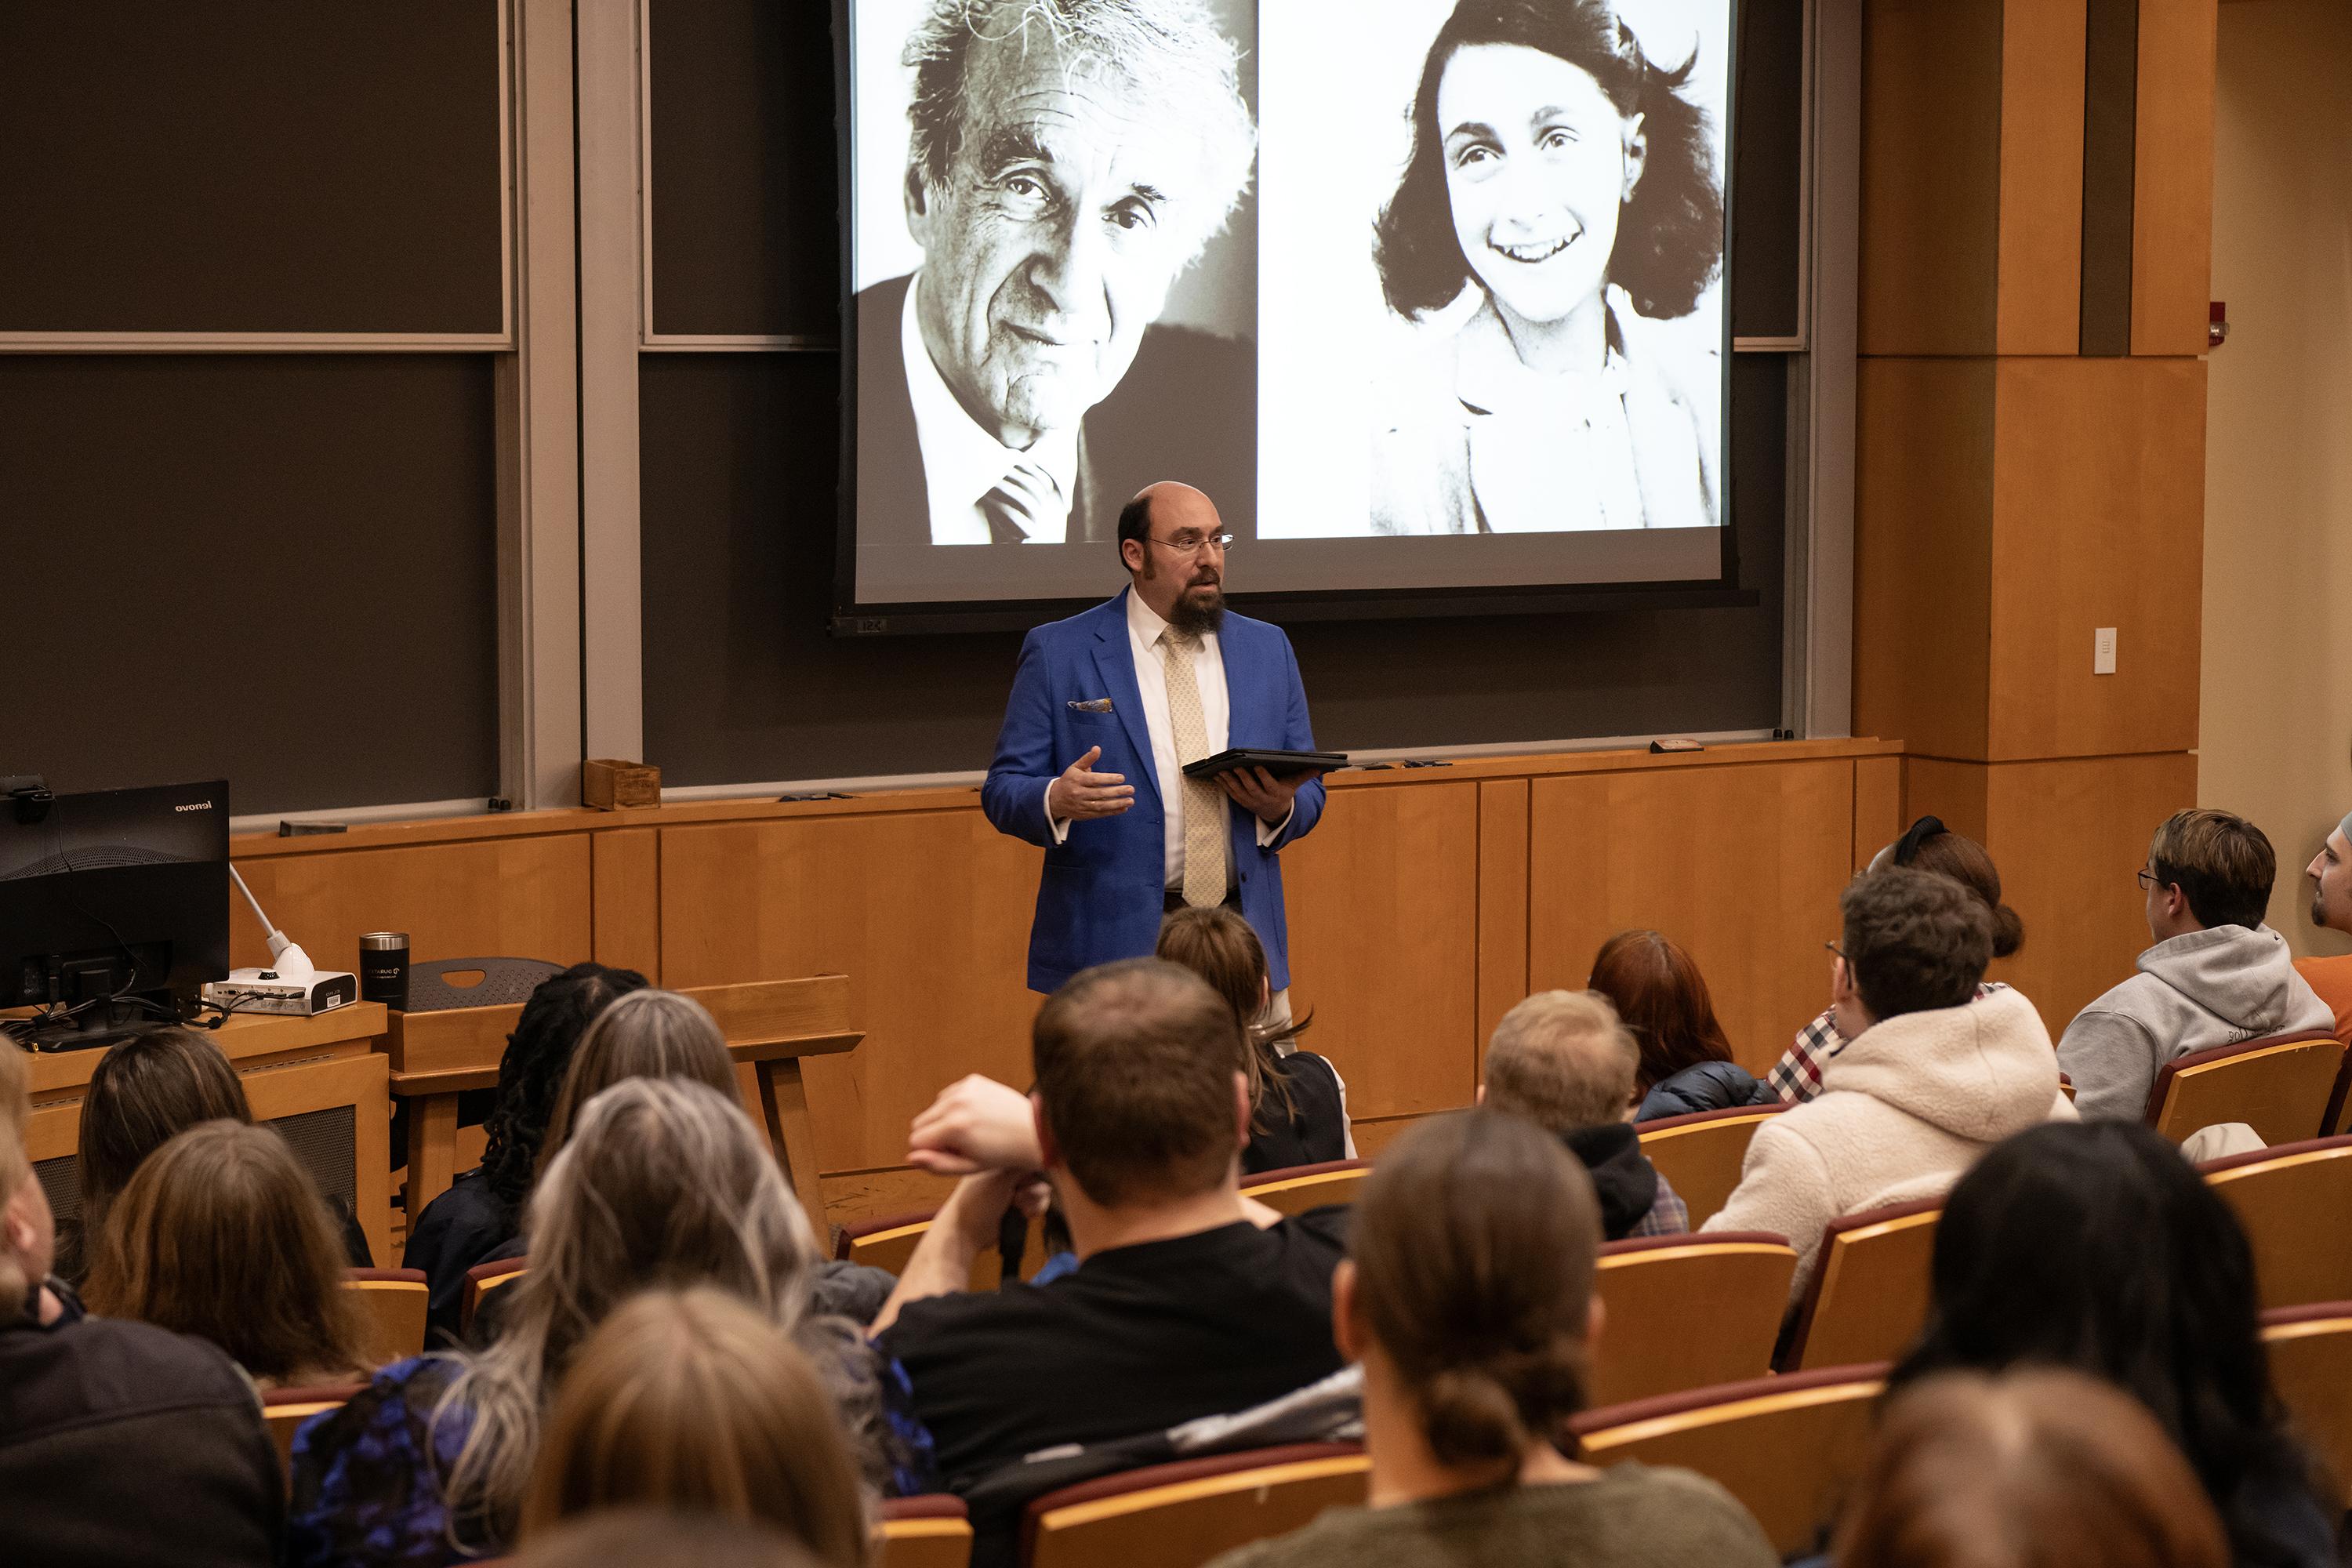 Aaron Krochmal addresses a room of students regarding the Holocaust.